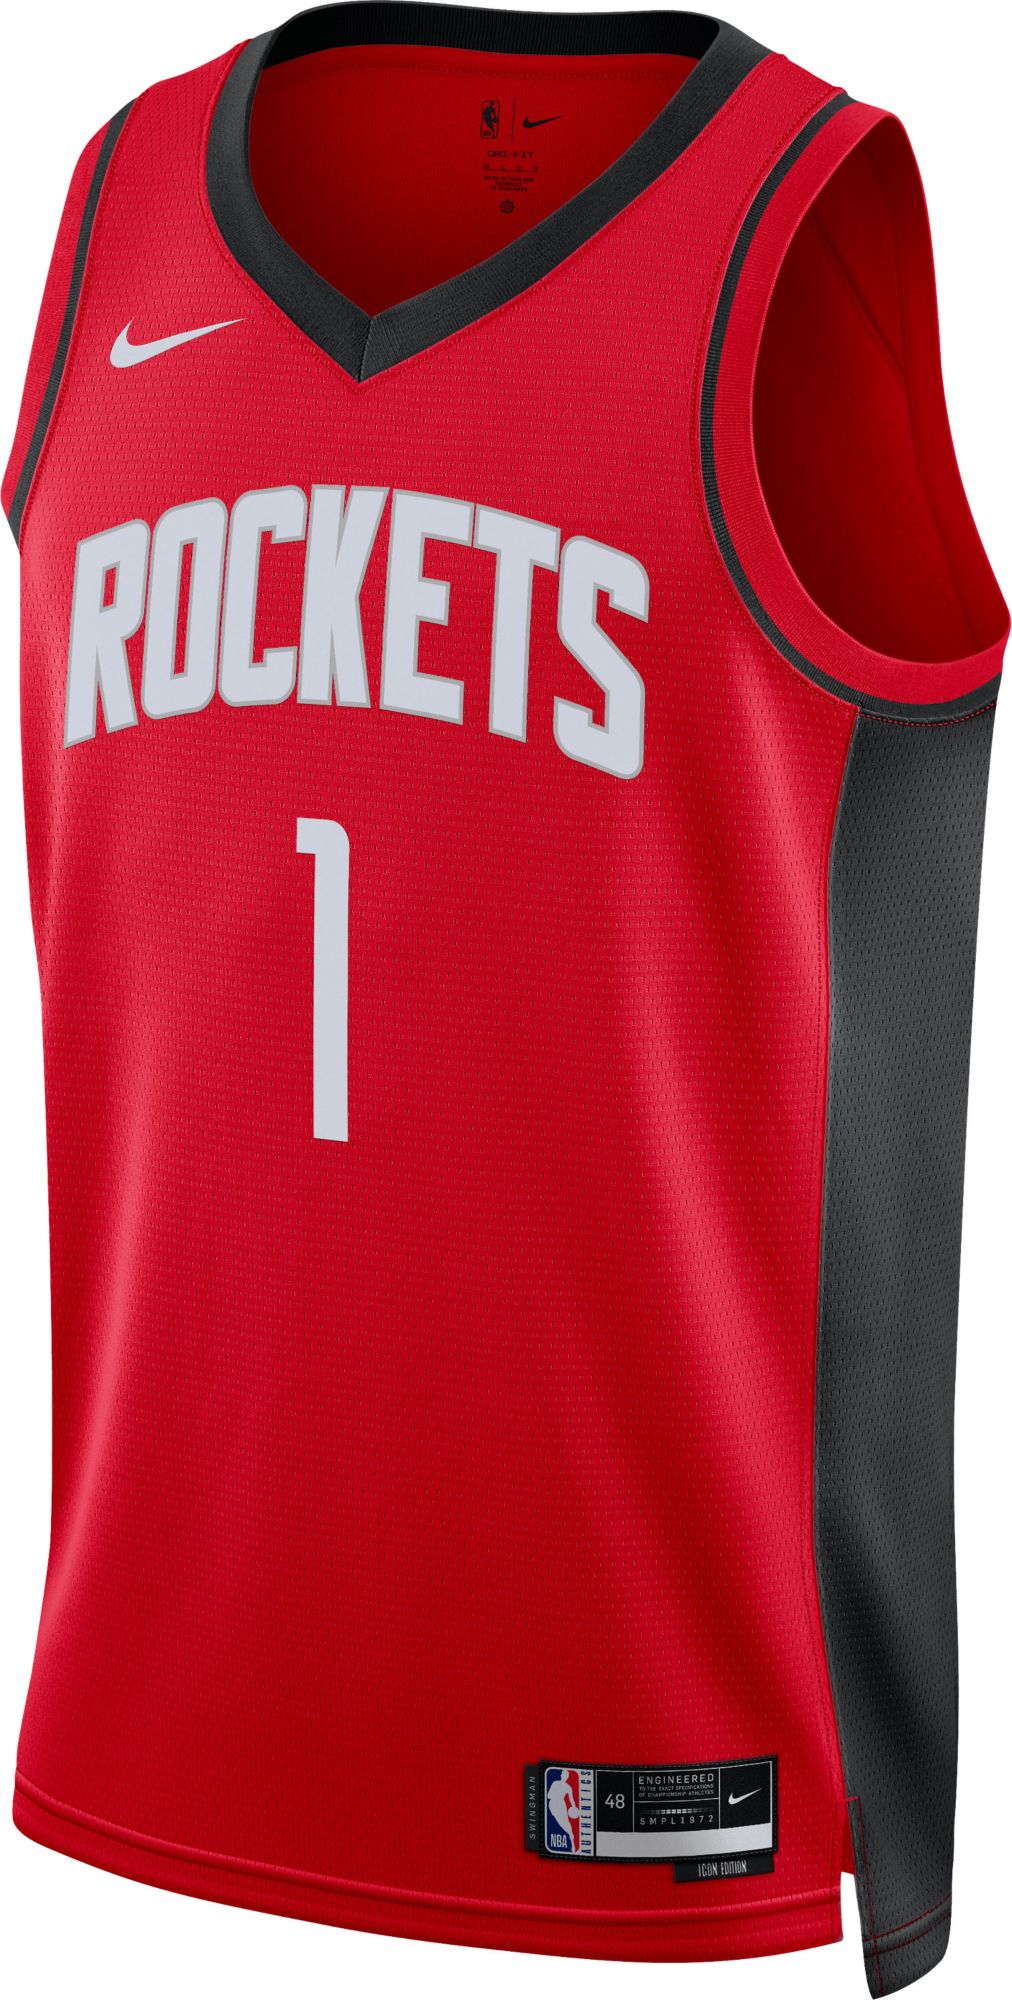 Houston Rockets adult sizes jersey